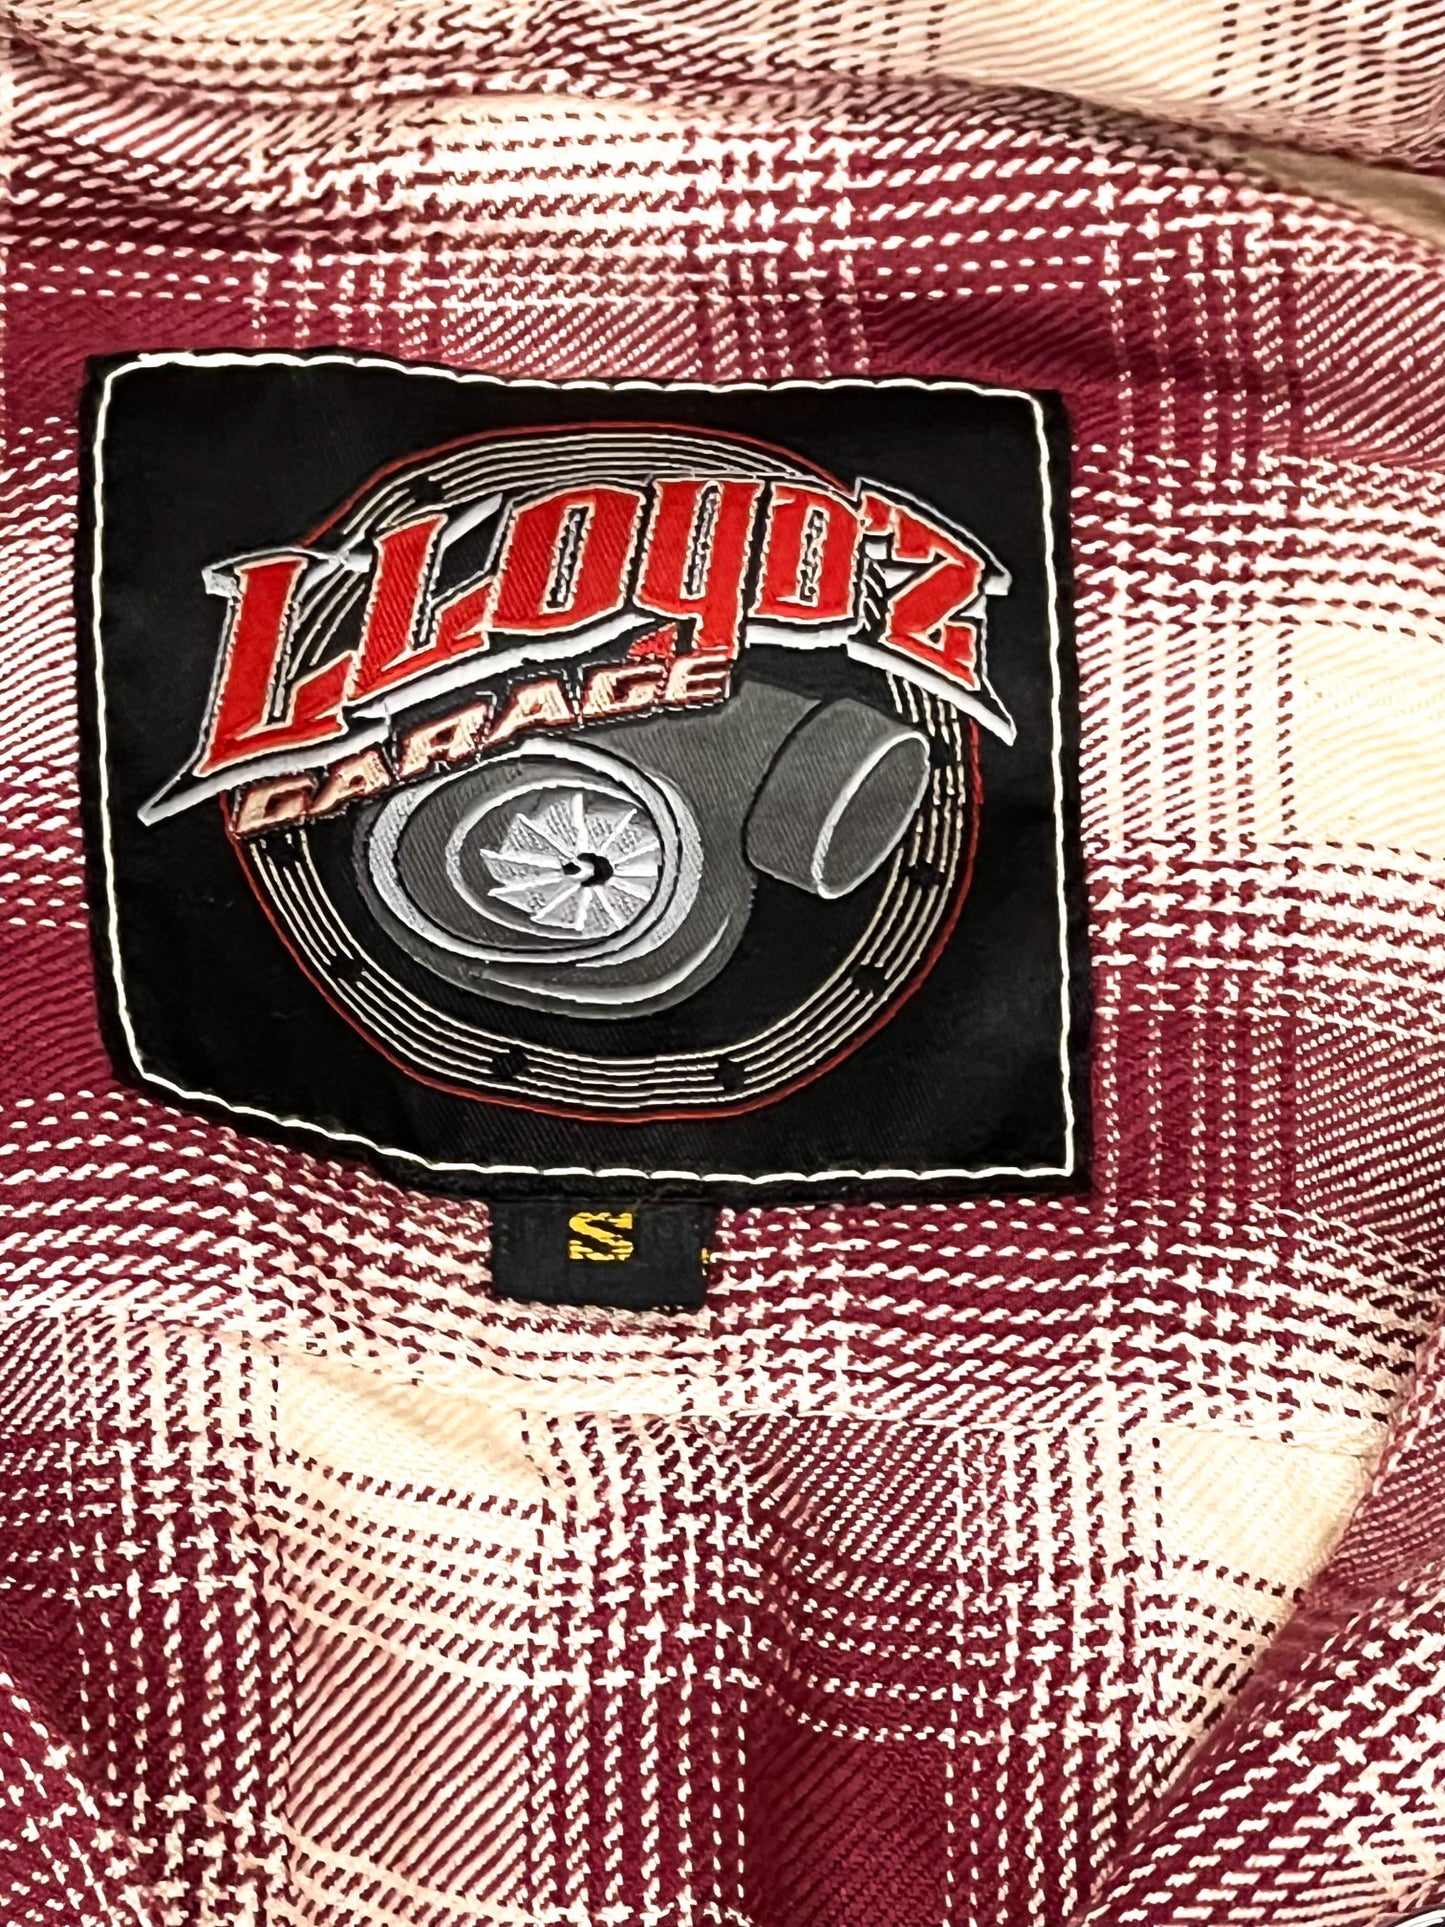 Lloyd'z Garage Flannel, Red/Cream- Mens